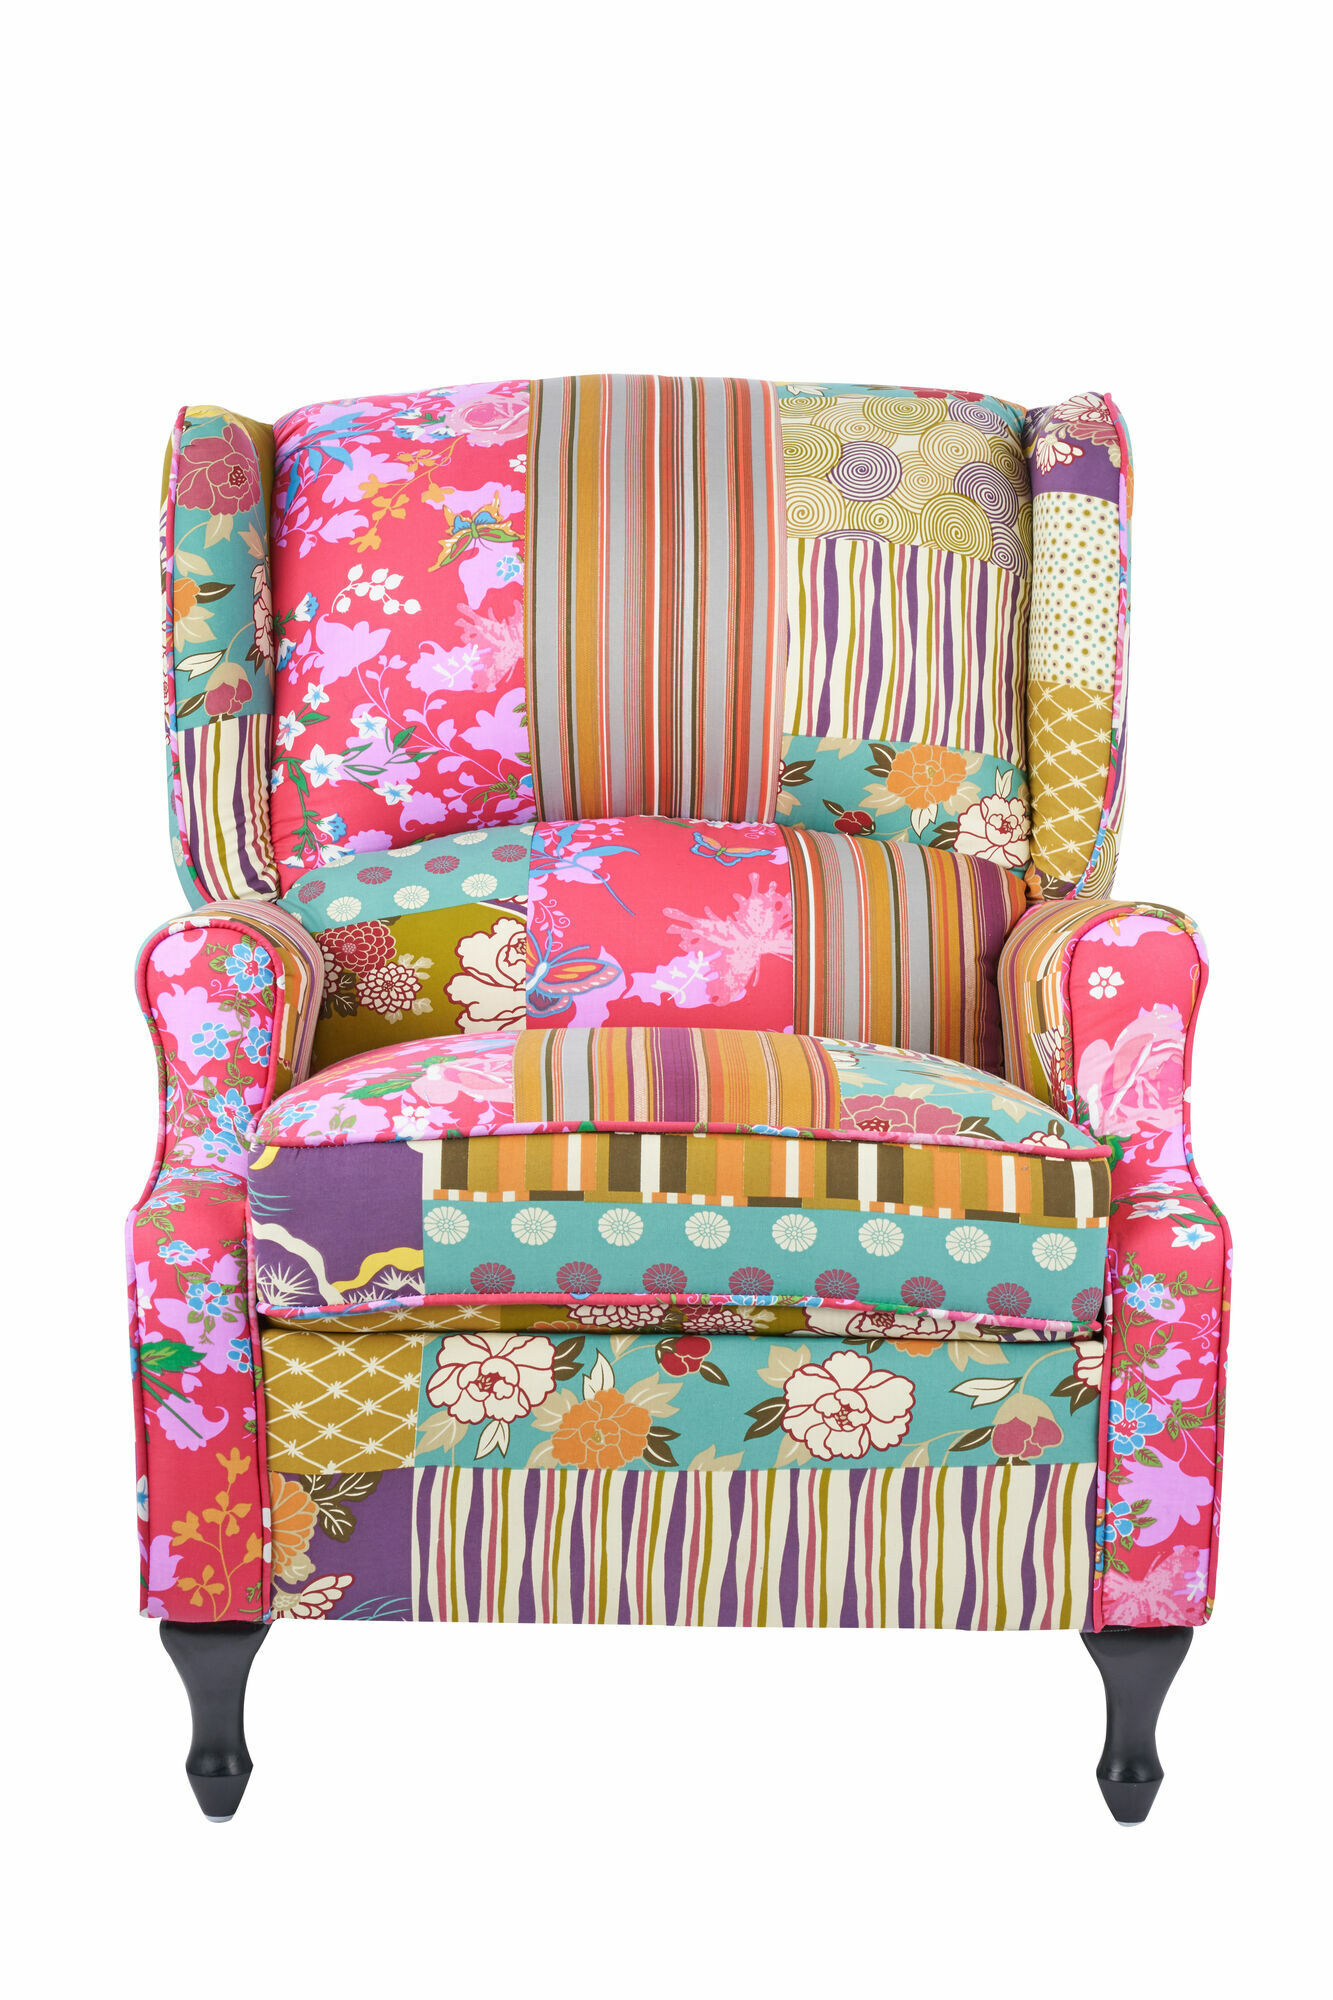 Stuhl im bunten Design